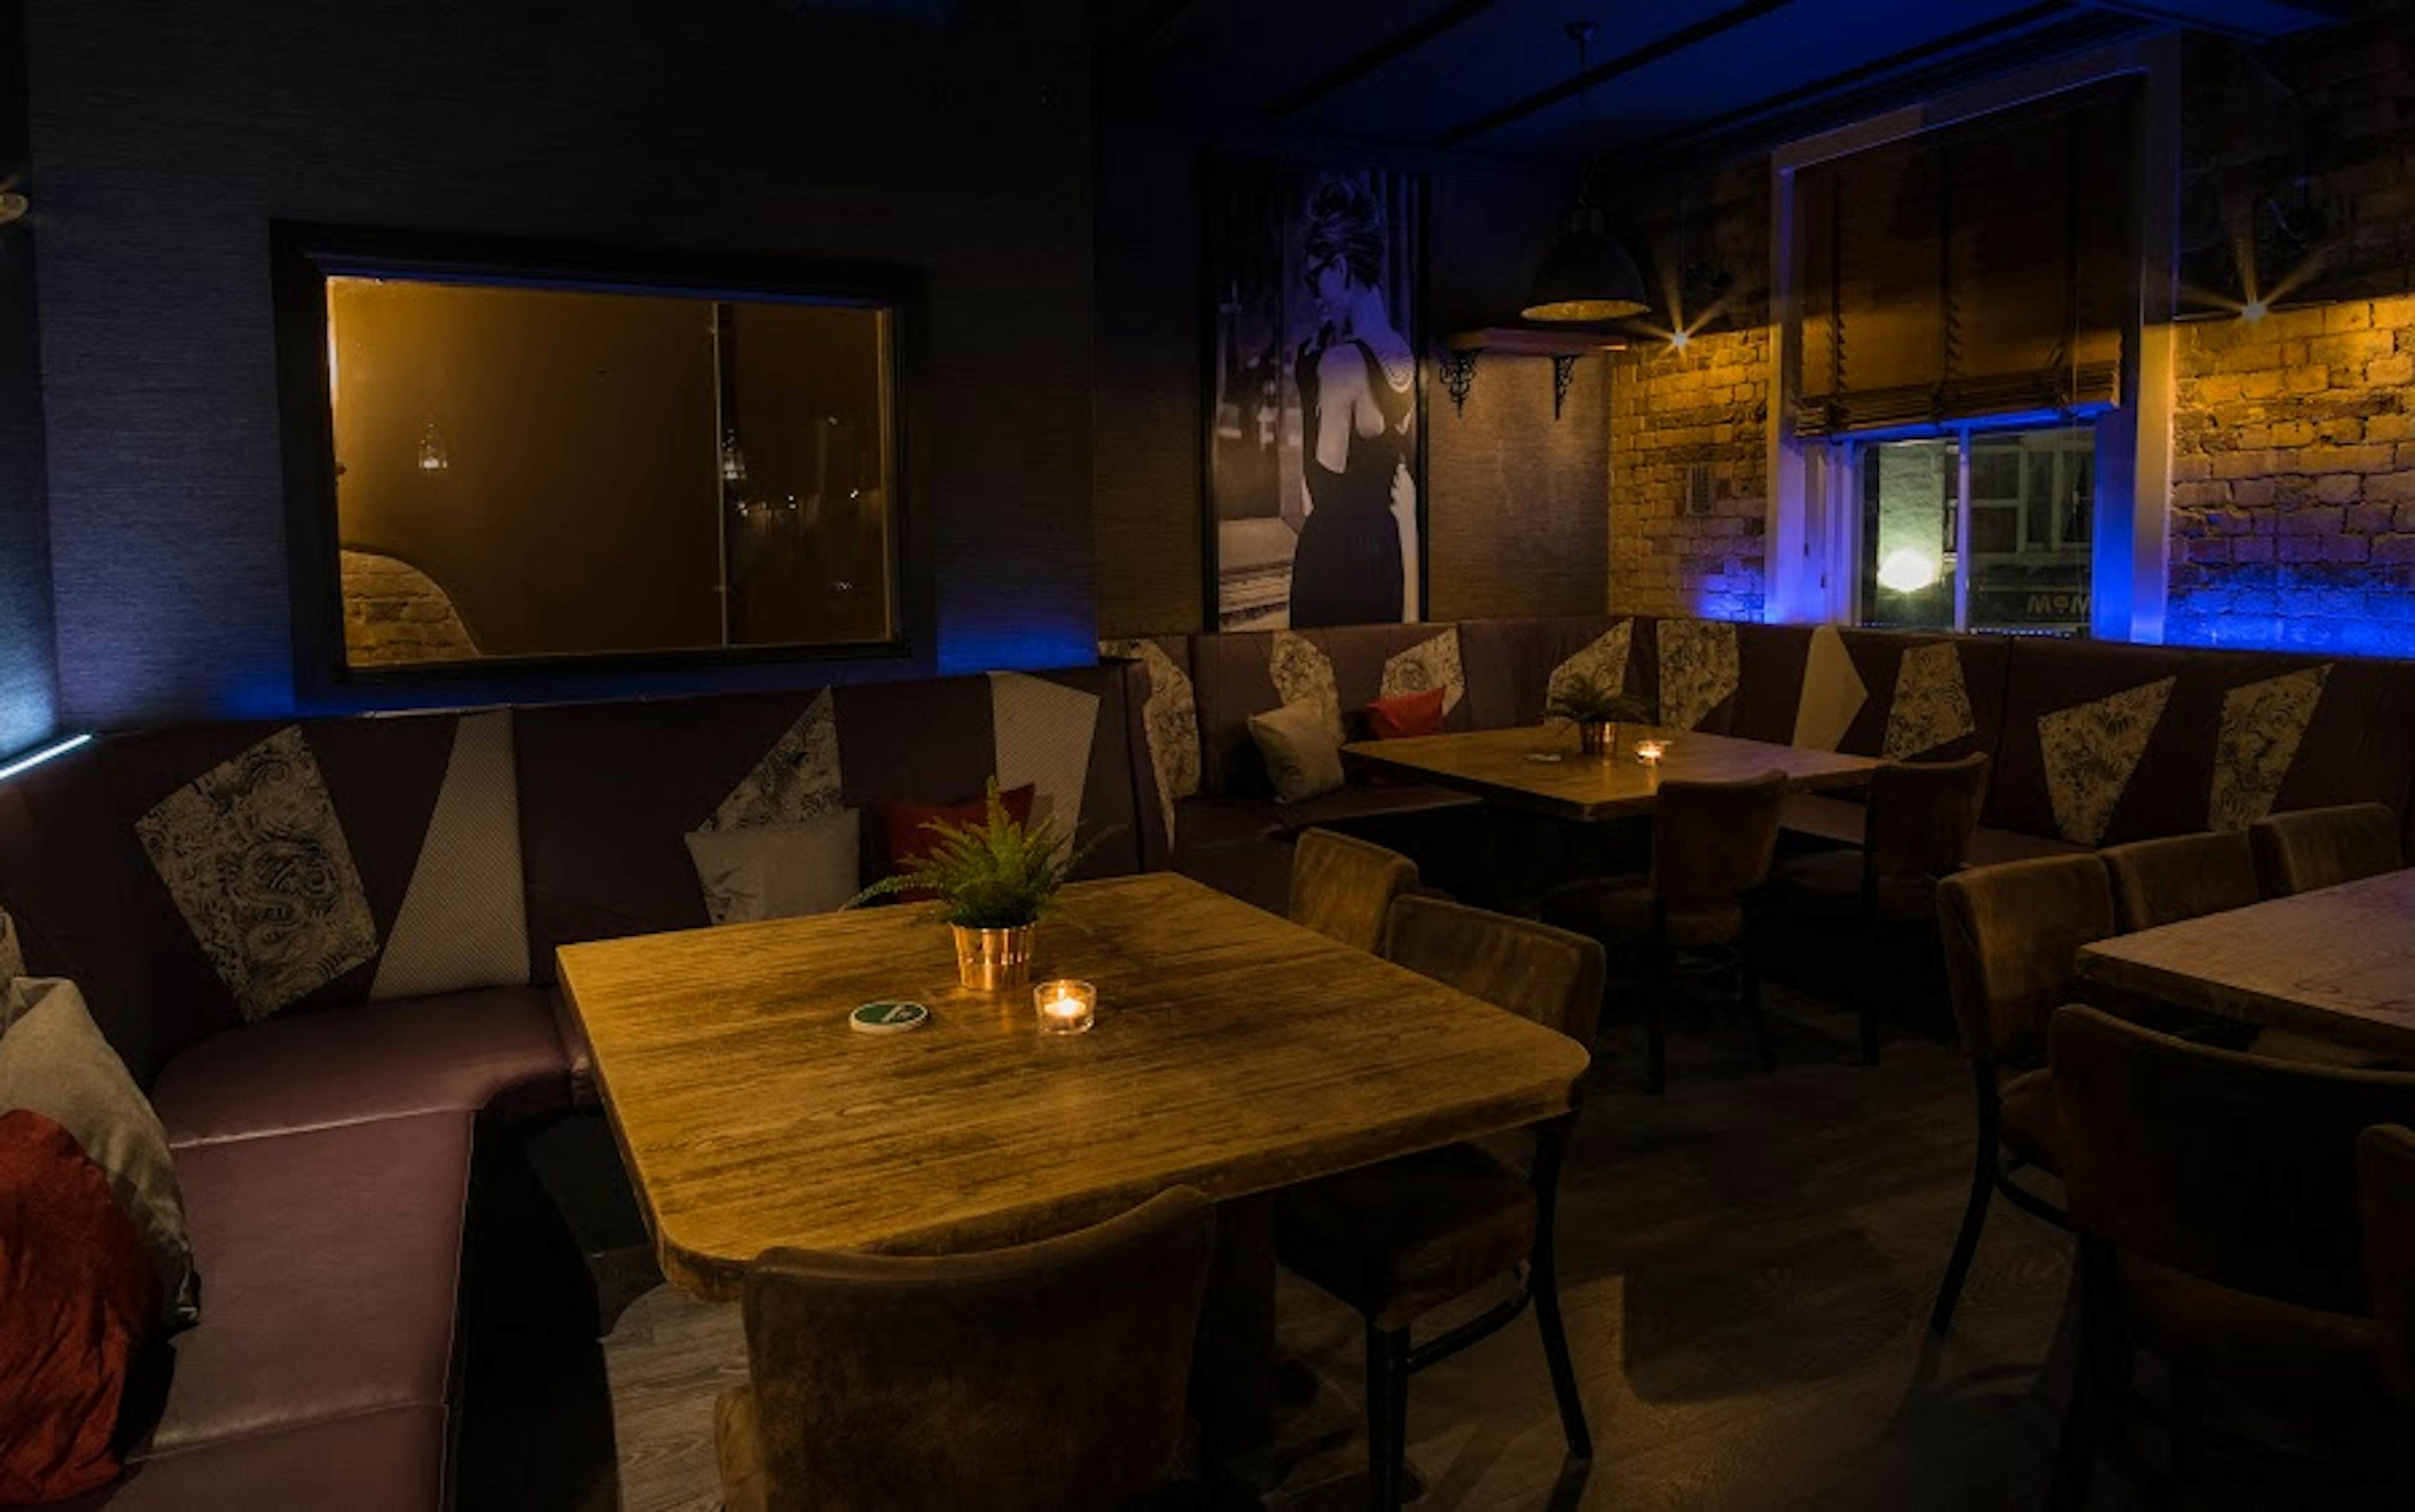 Broadway Bar (Fulham) - 1st Floor Lounge Area image 1